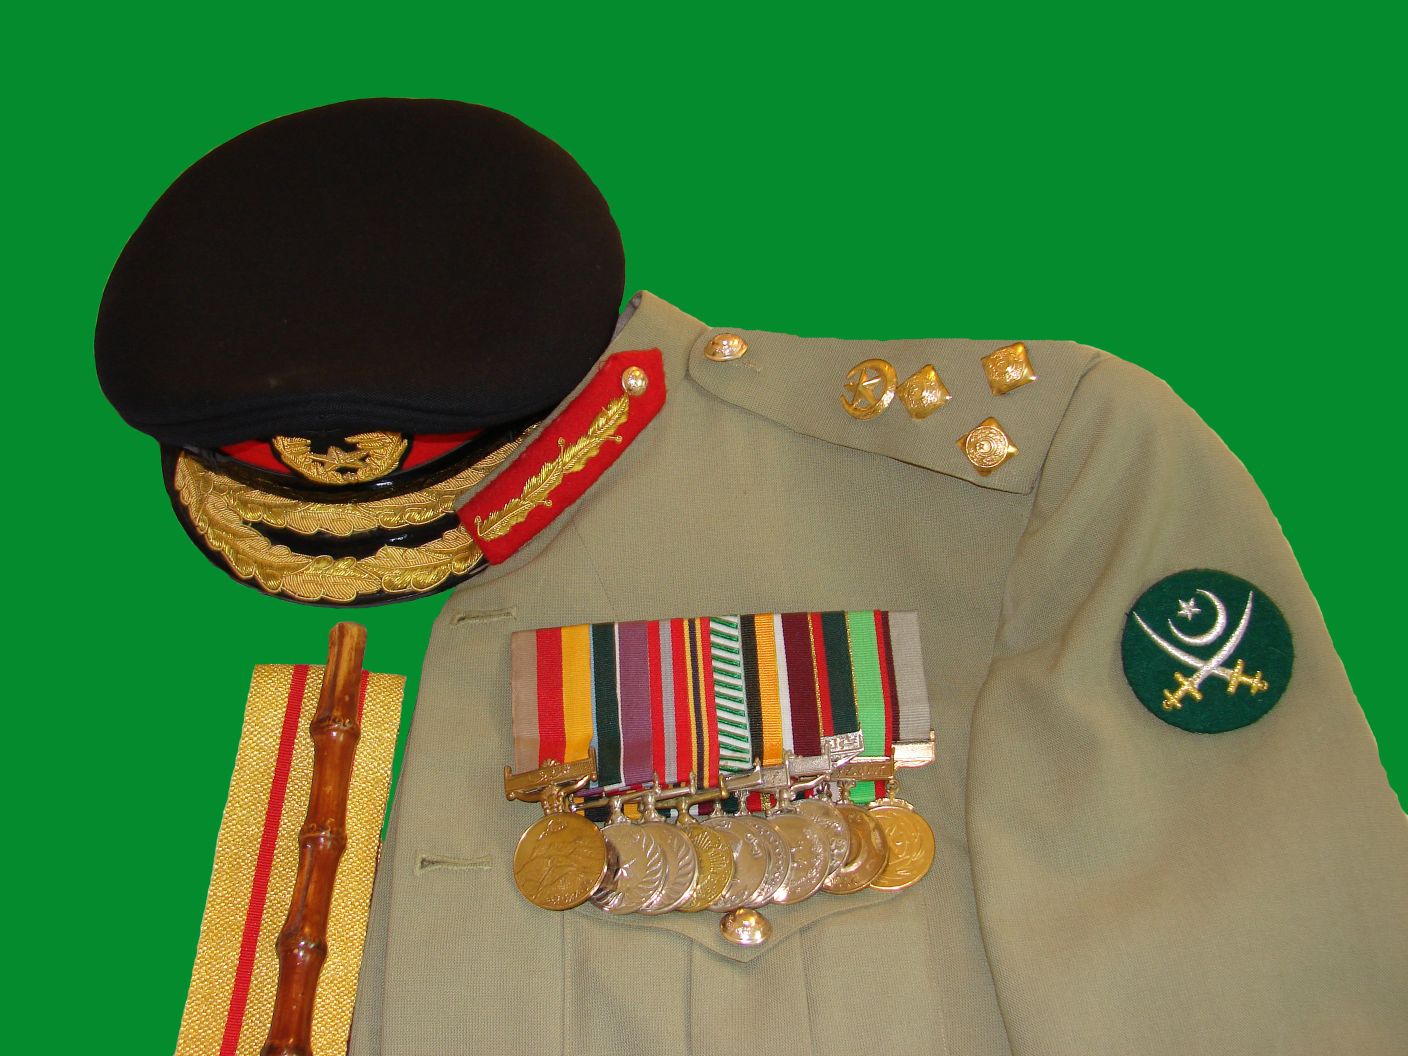 pak-army-uniform